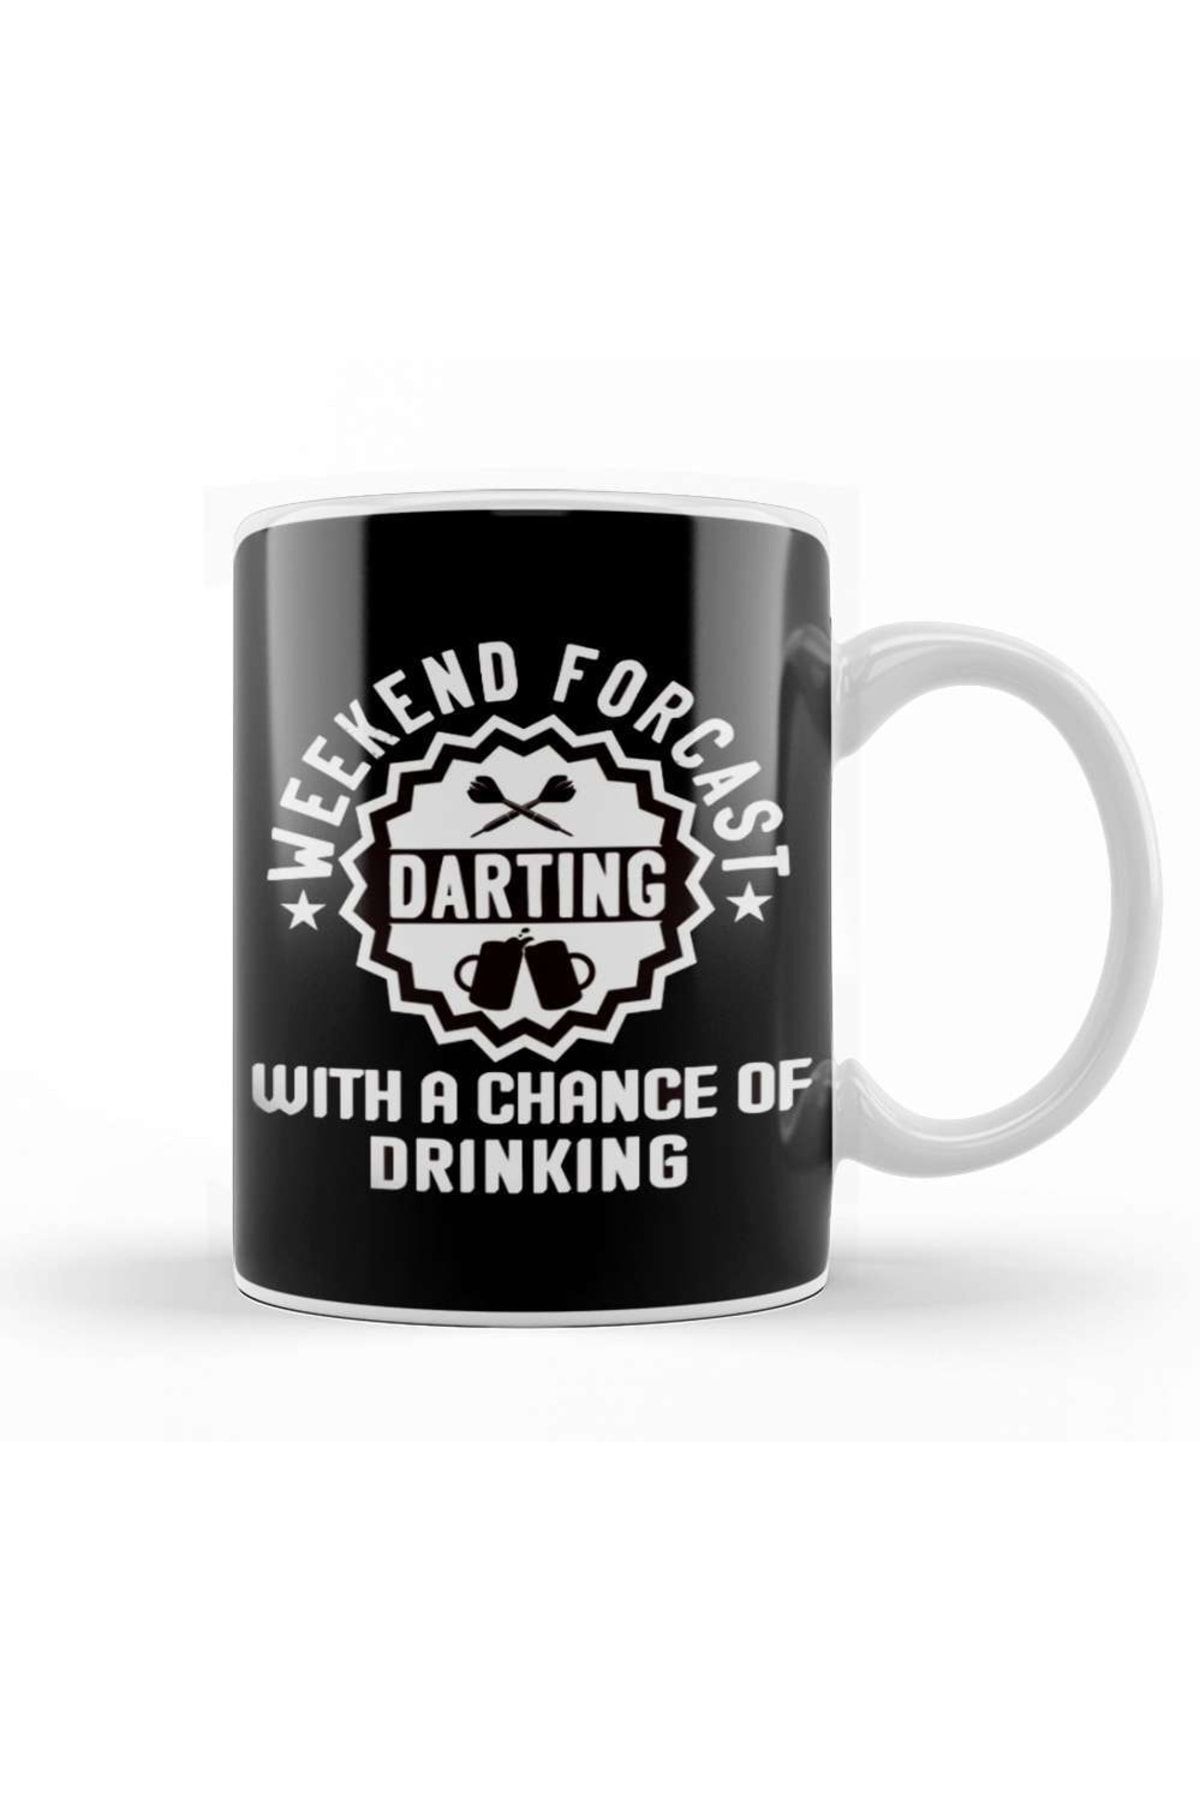 Humuts Weekend Forecast Darting Beer Drinking Dartist Darts Player Kupa Bardak Porselen